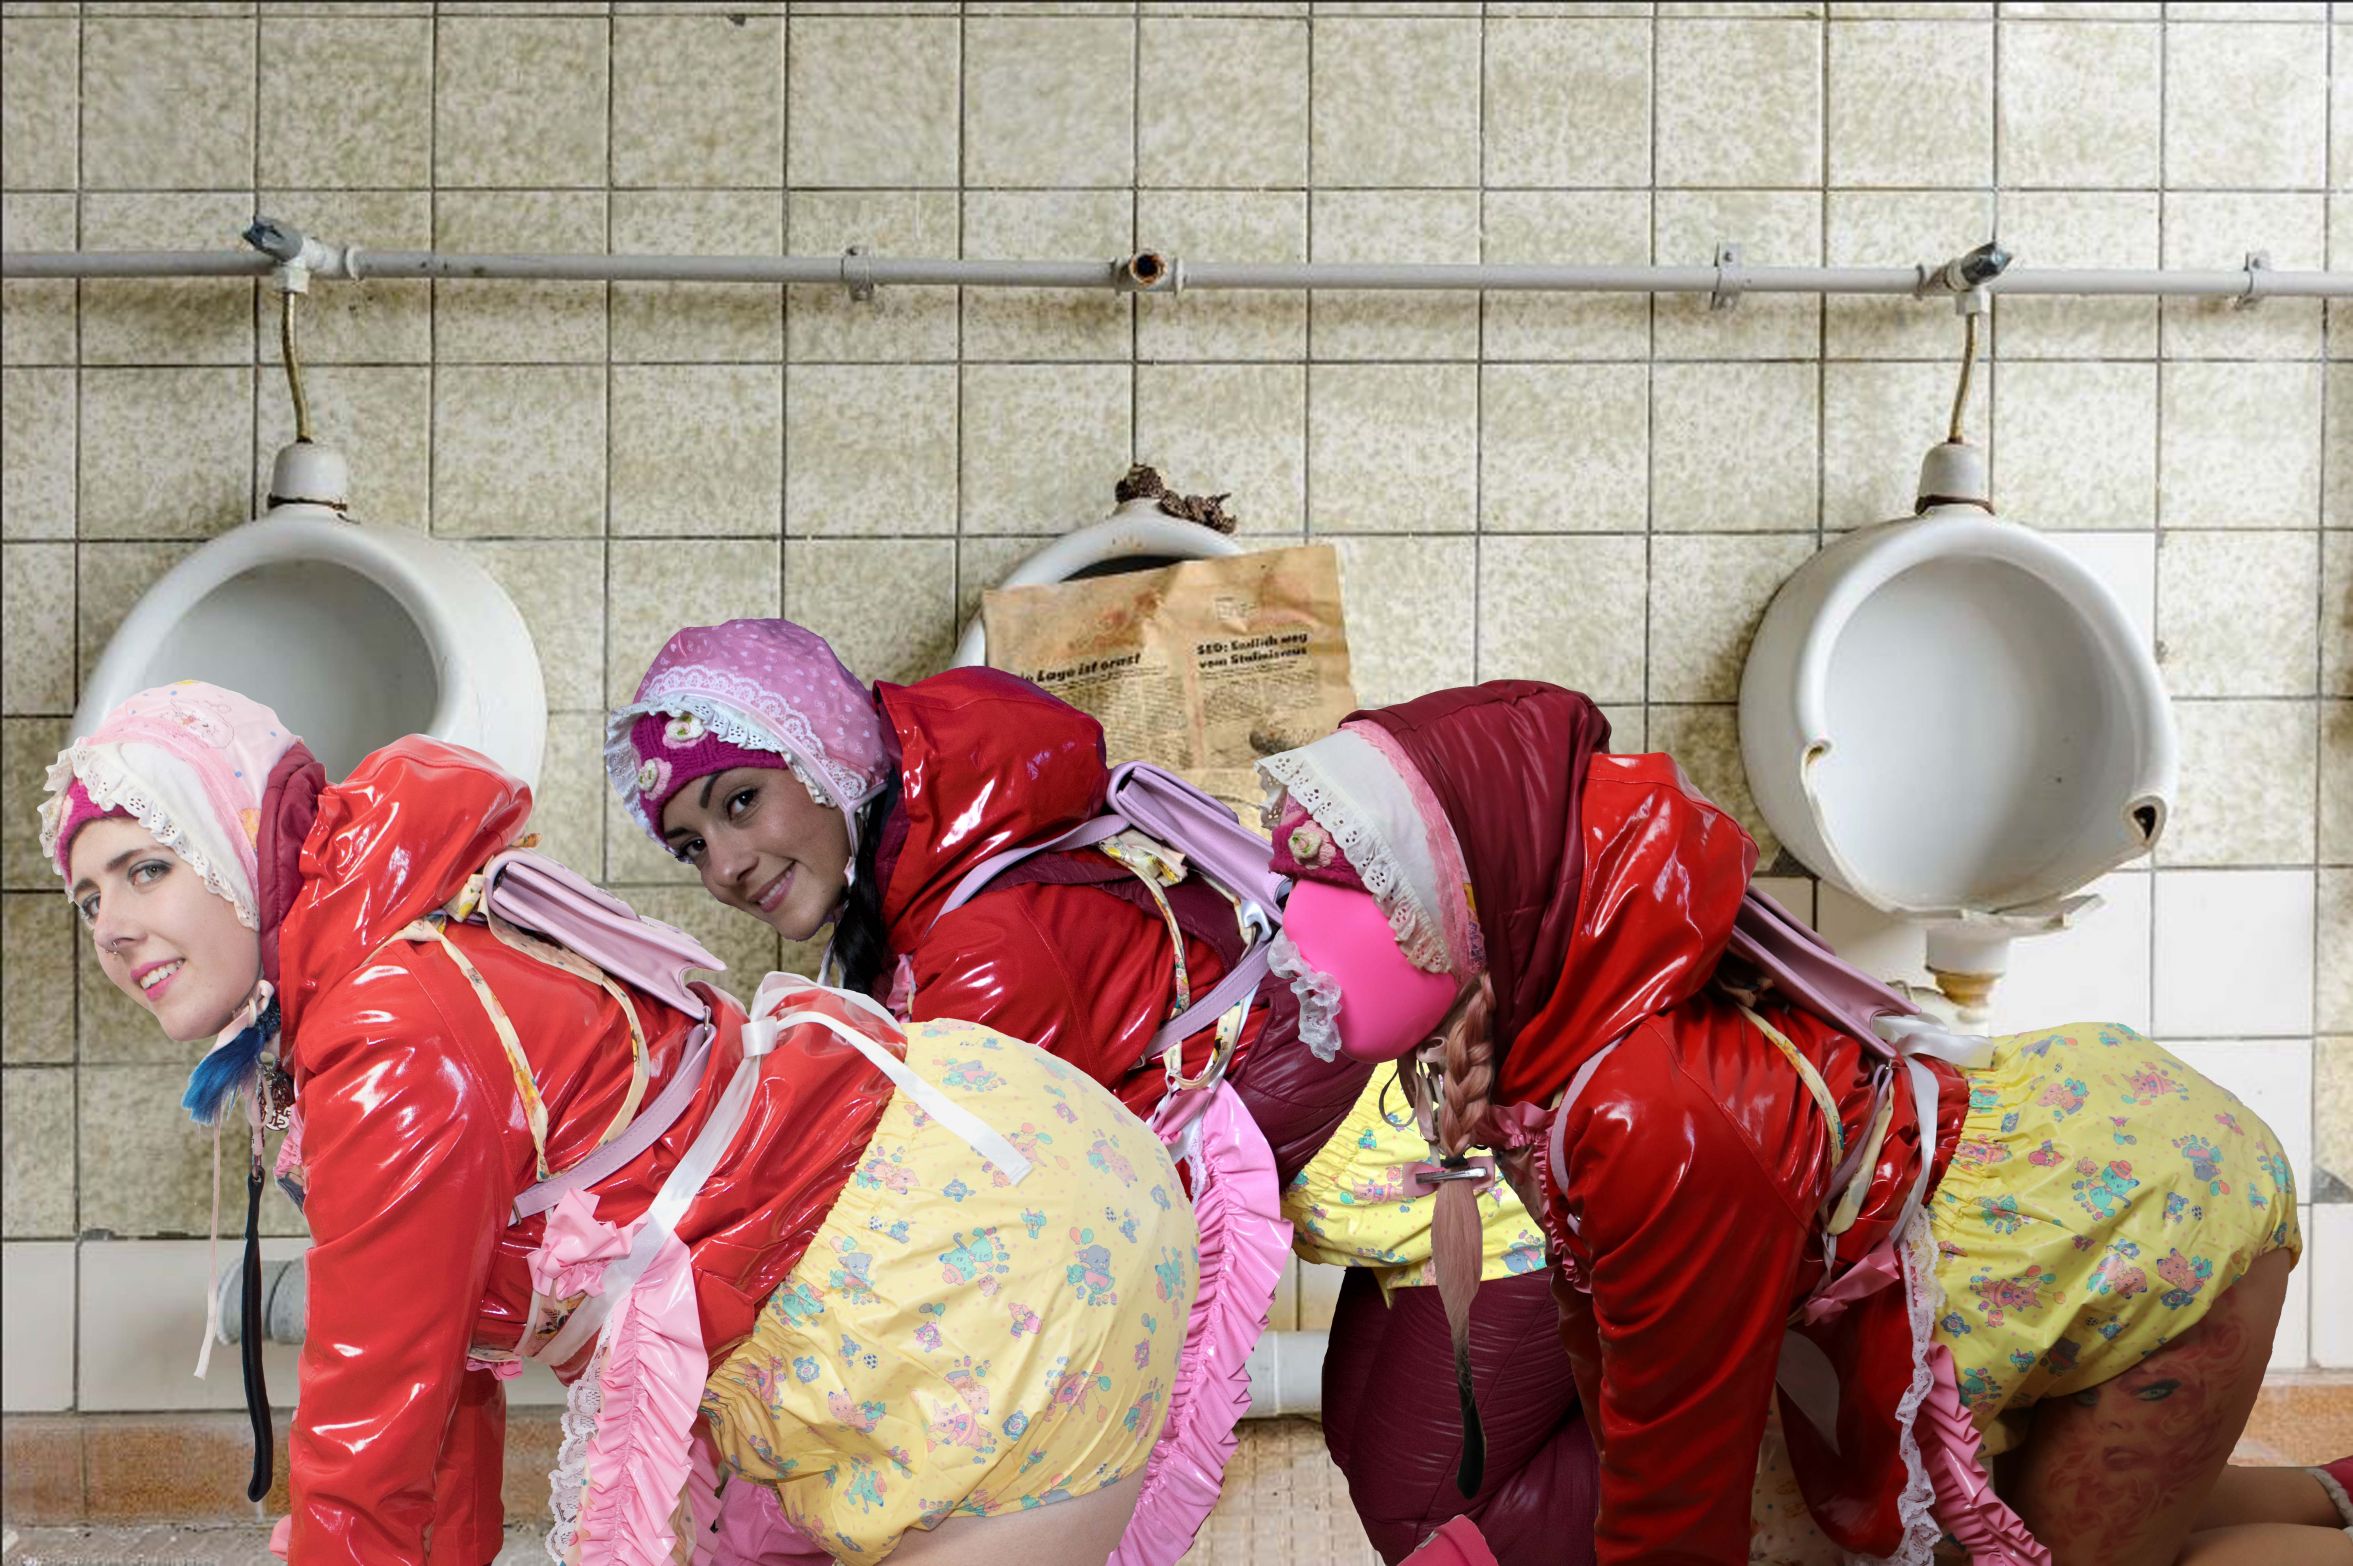 Pimp Hassans Toilet piglets waiting for users Blank Meme Template